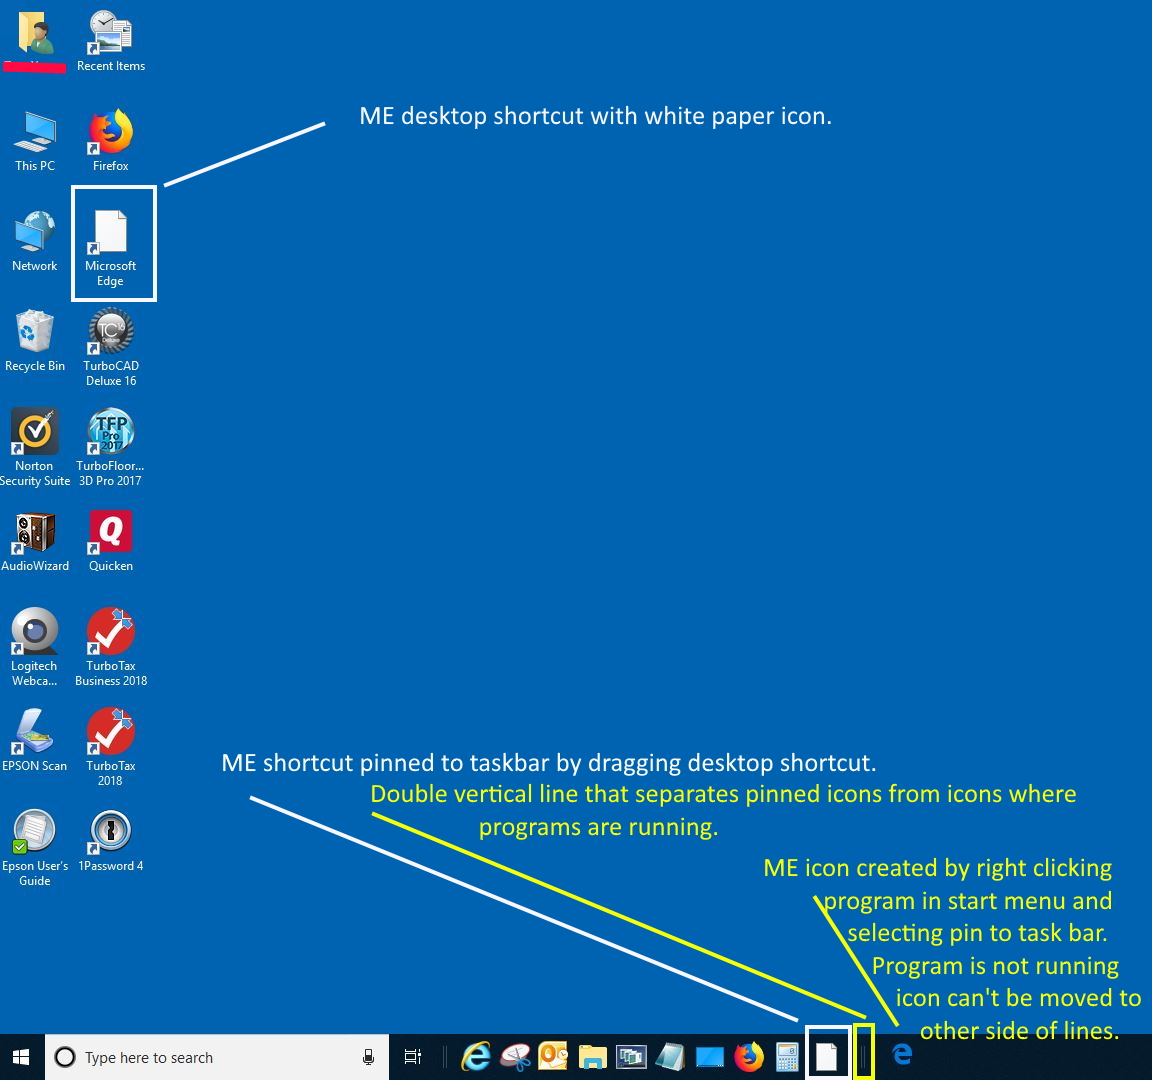 Microsoft Edge Icon On Desktop